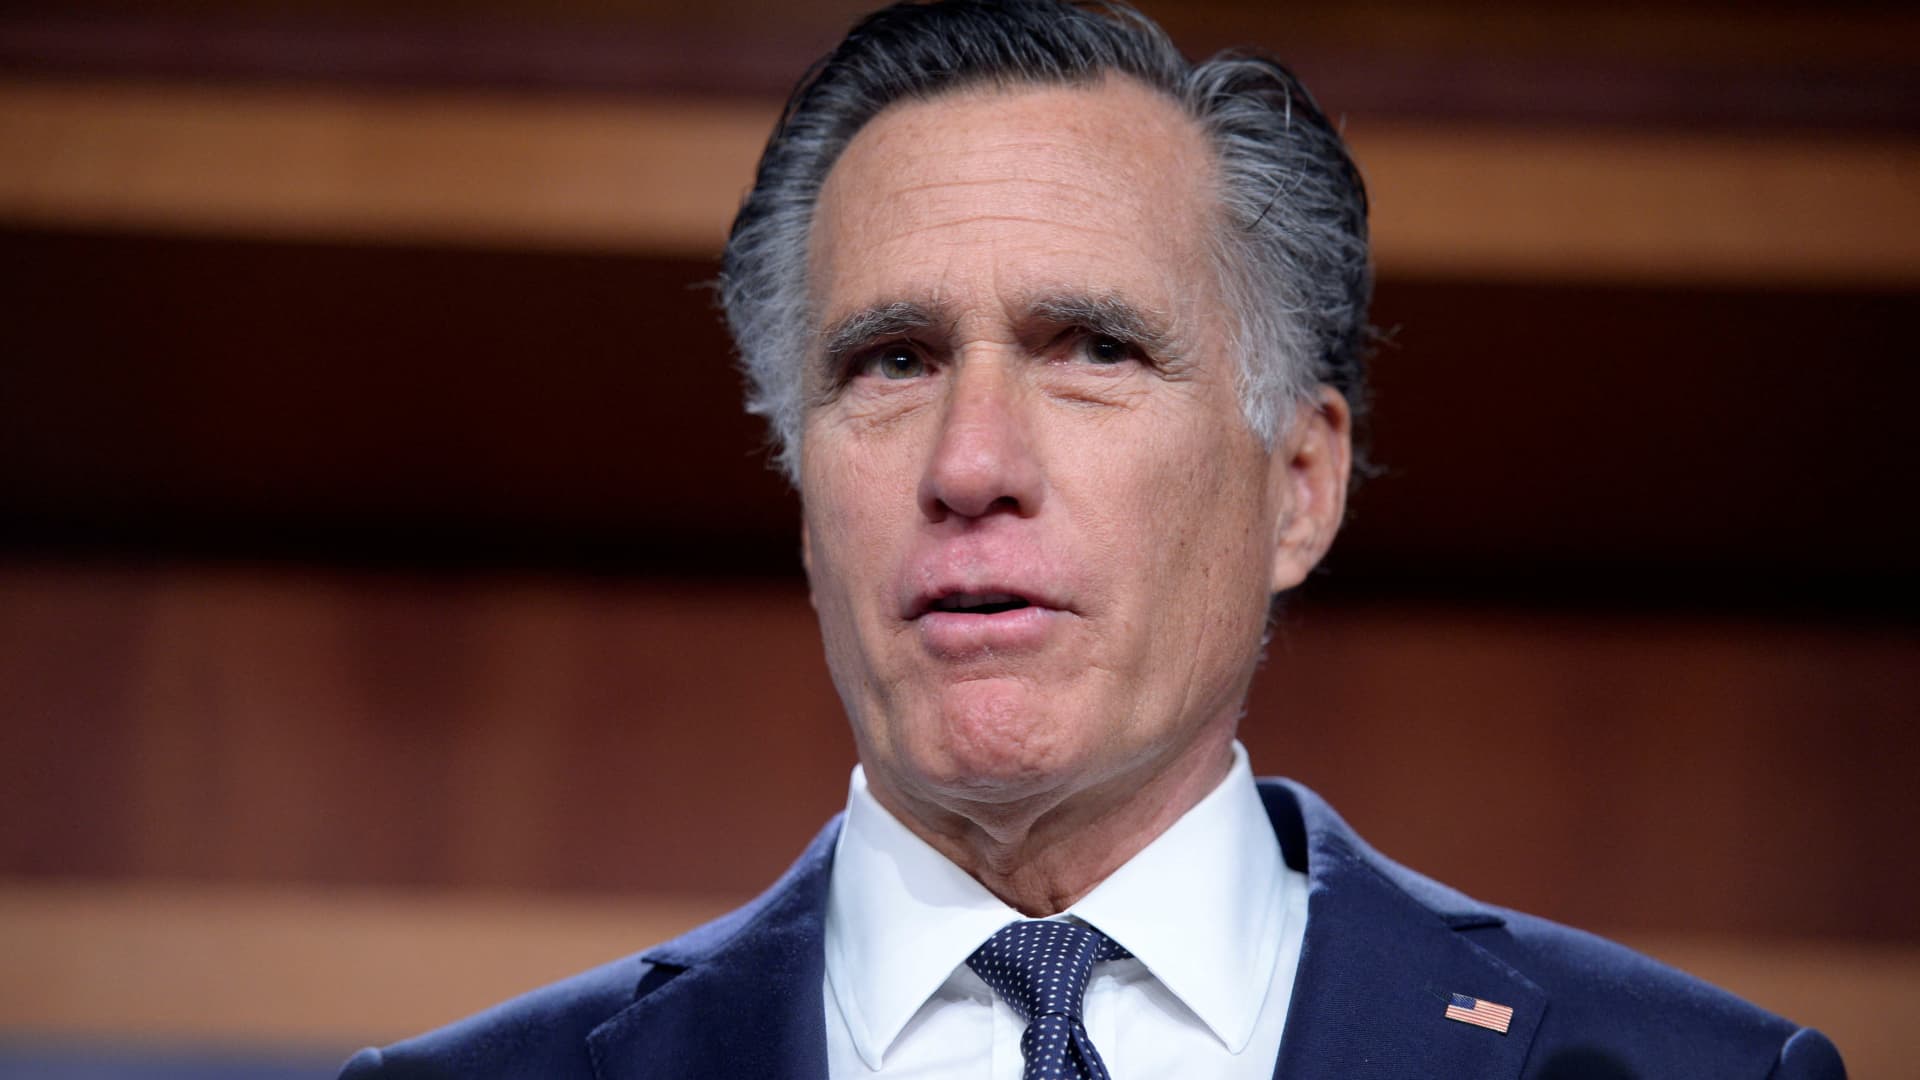 GOP Sen. Mitt Romney says he will not run for reelection